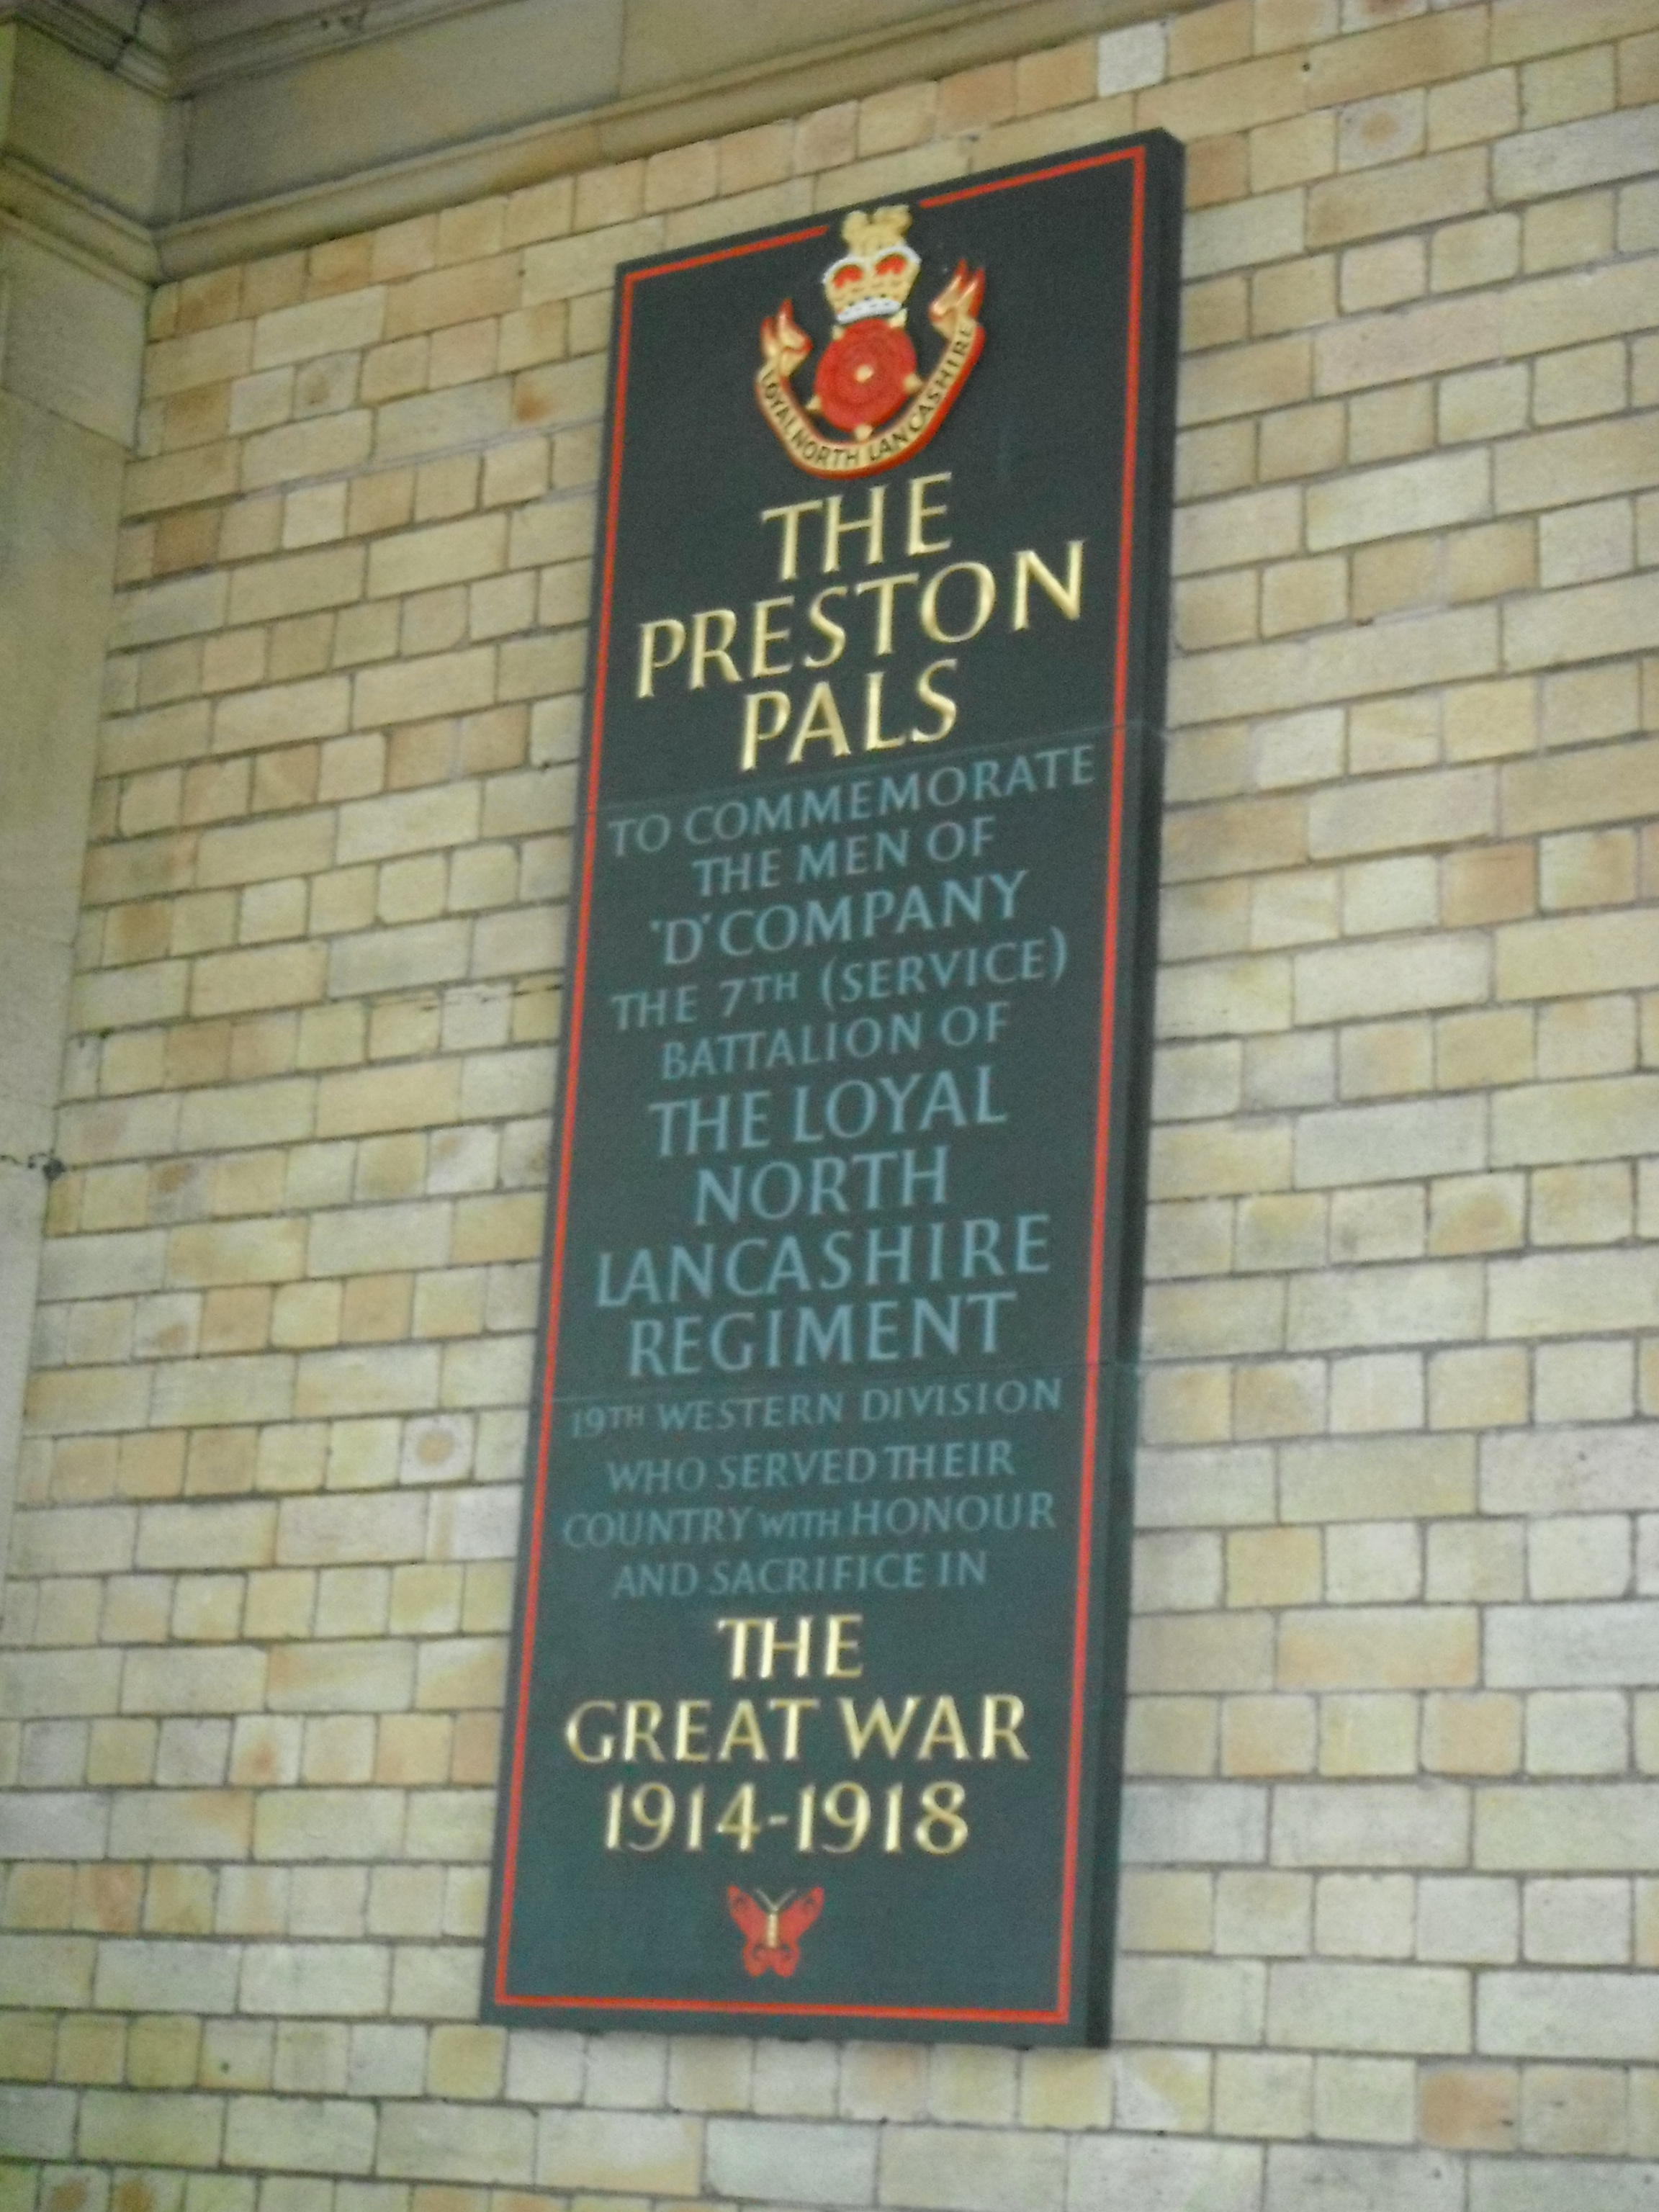 Photo taken by me – war memorial – Preston Railway Station